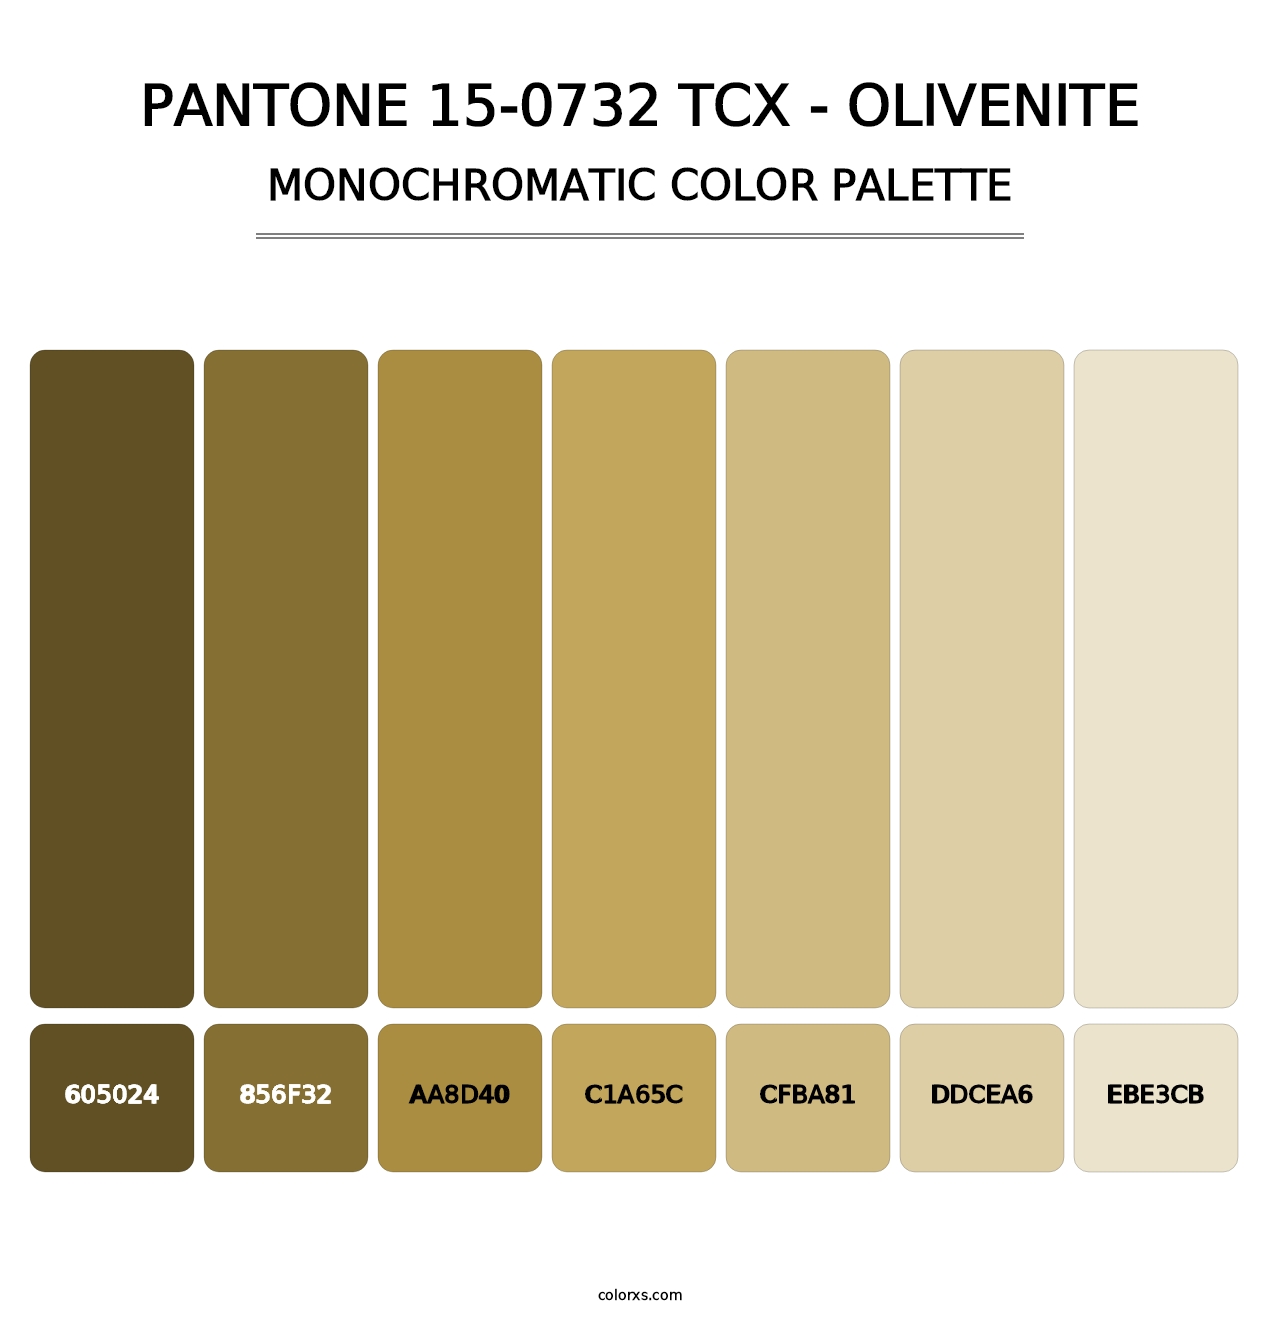 PANTONE 15-0732 TCX - Olivenite - Monochromatic Color Palette